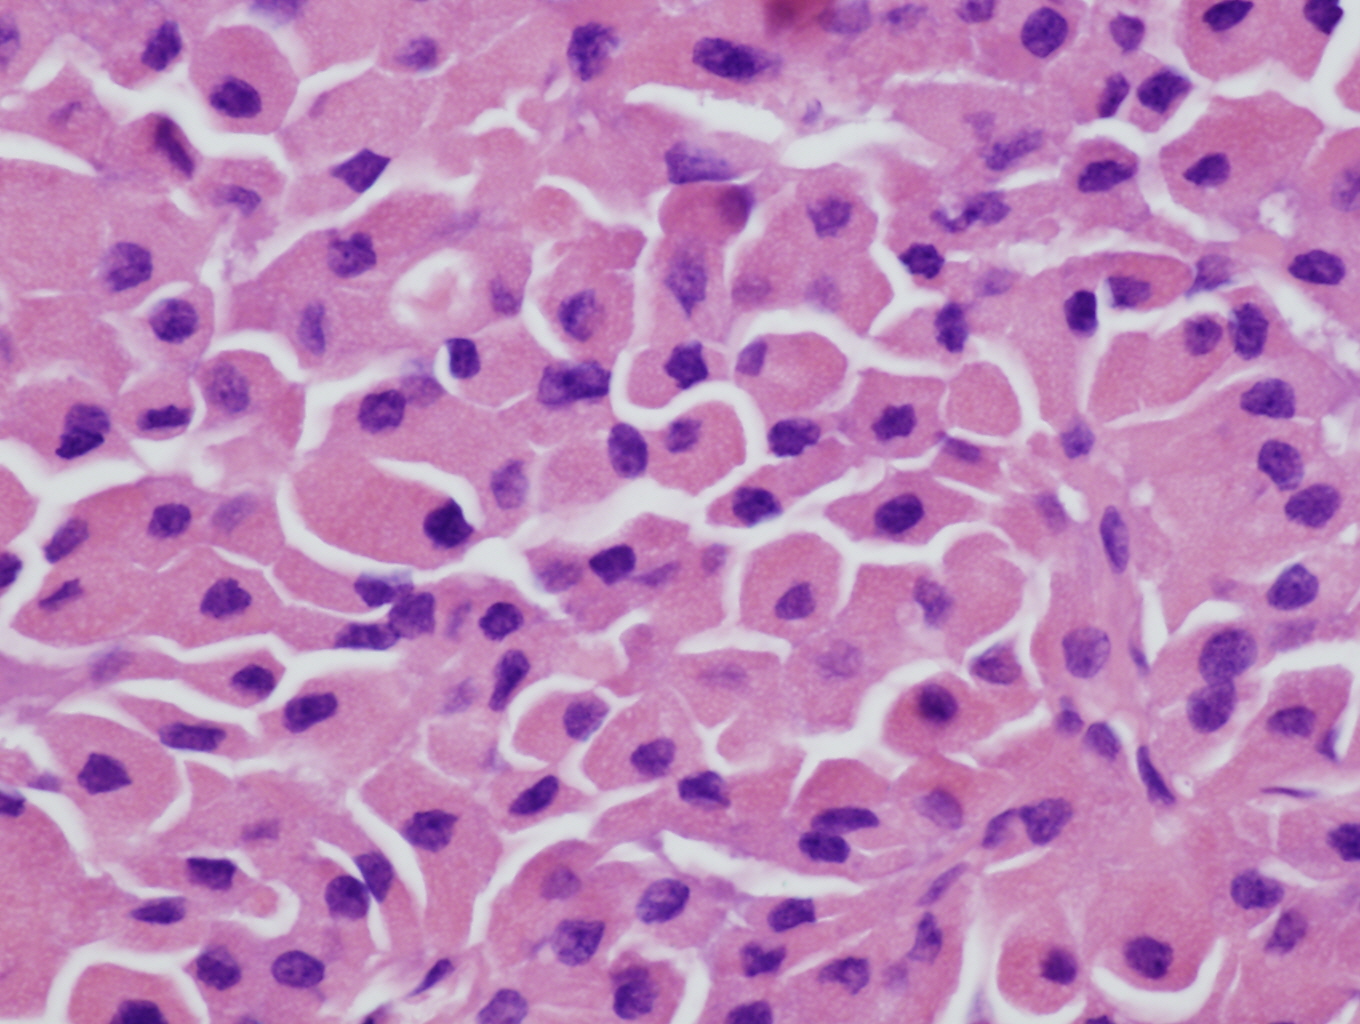 Pathology Outlines - Oncocytic (Hürthle cell) tumors
